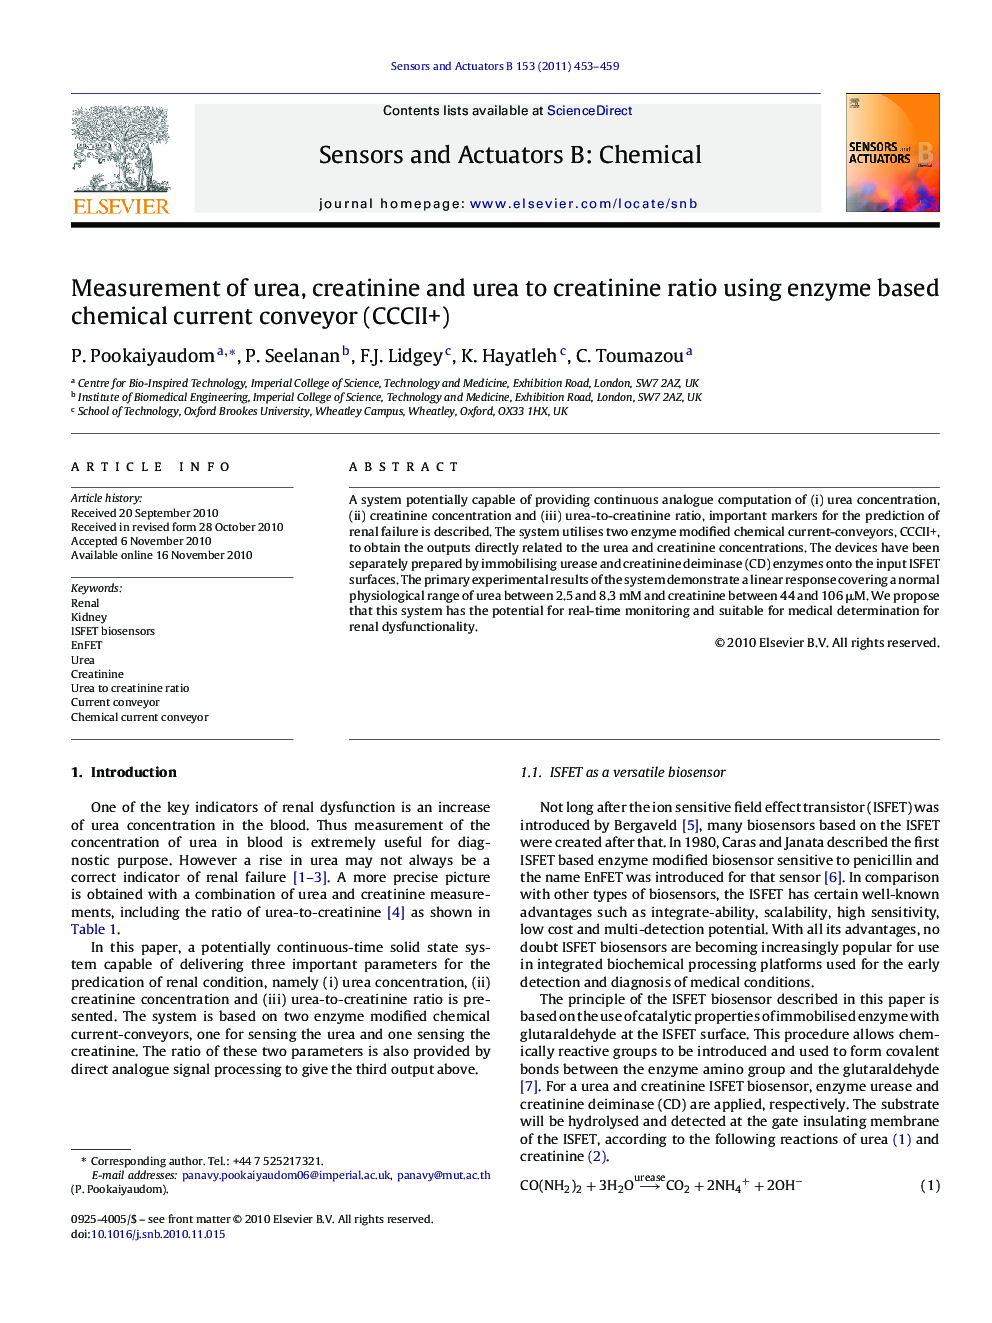 Measurement of urea, creatinine and urea to creatinine ratio using enzyme based chemical current conveyor (CCCII+)